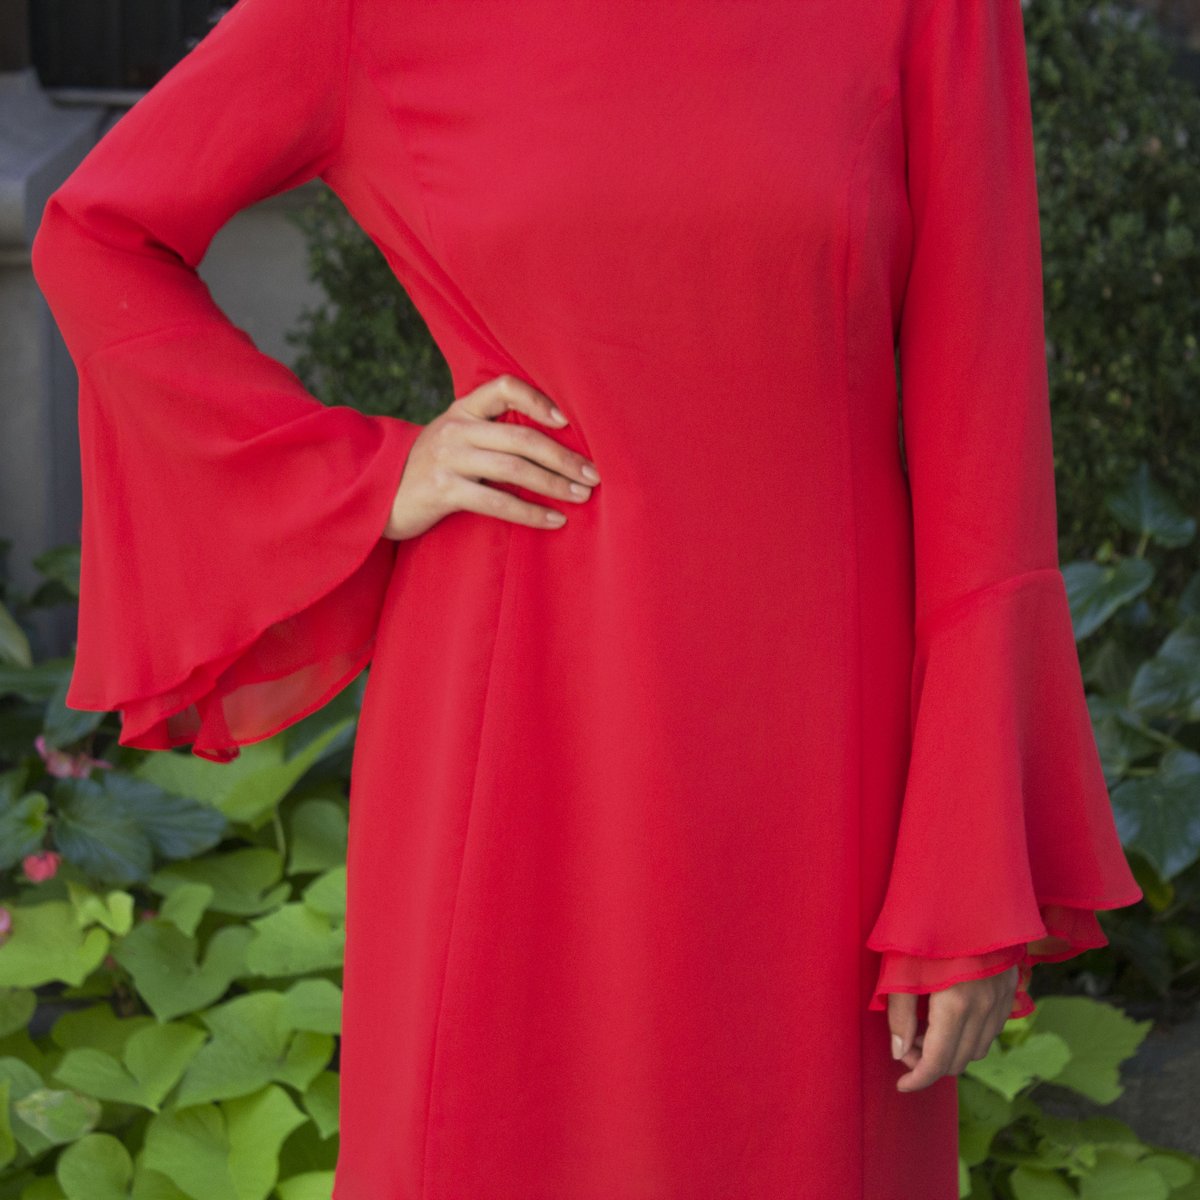 Love this little red dress! Shop the look now @Kohls. Click to Buy: https://t.co/rkpXoecTYQ https://t.co/lIq4HwQAqr